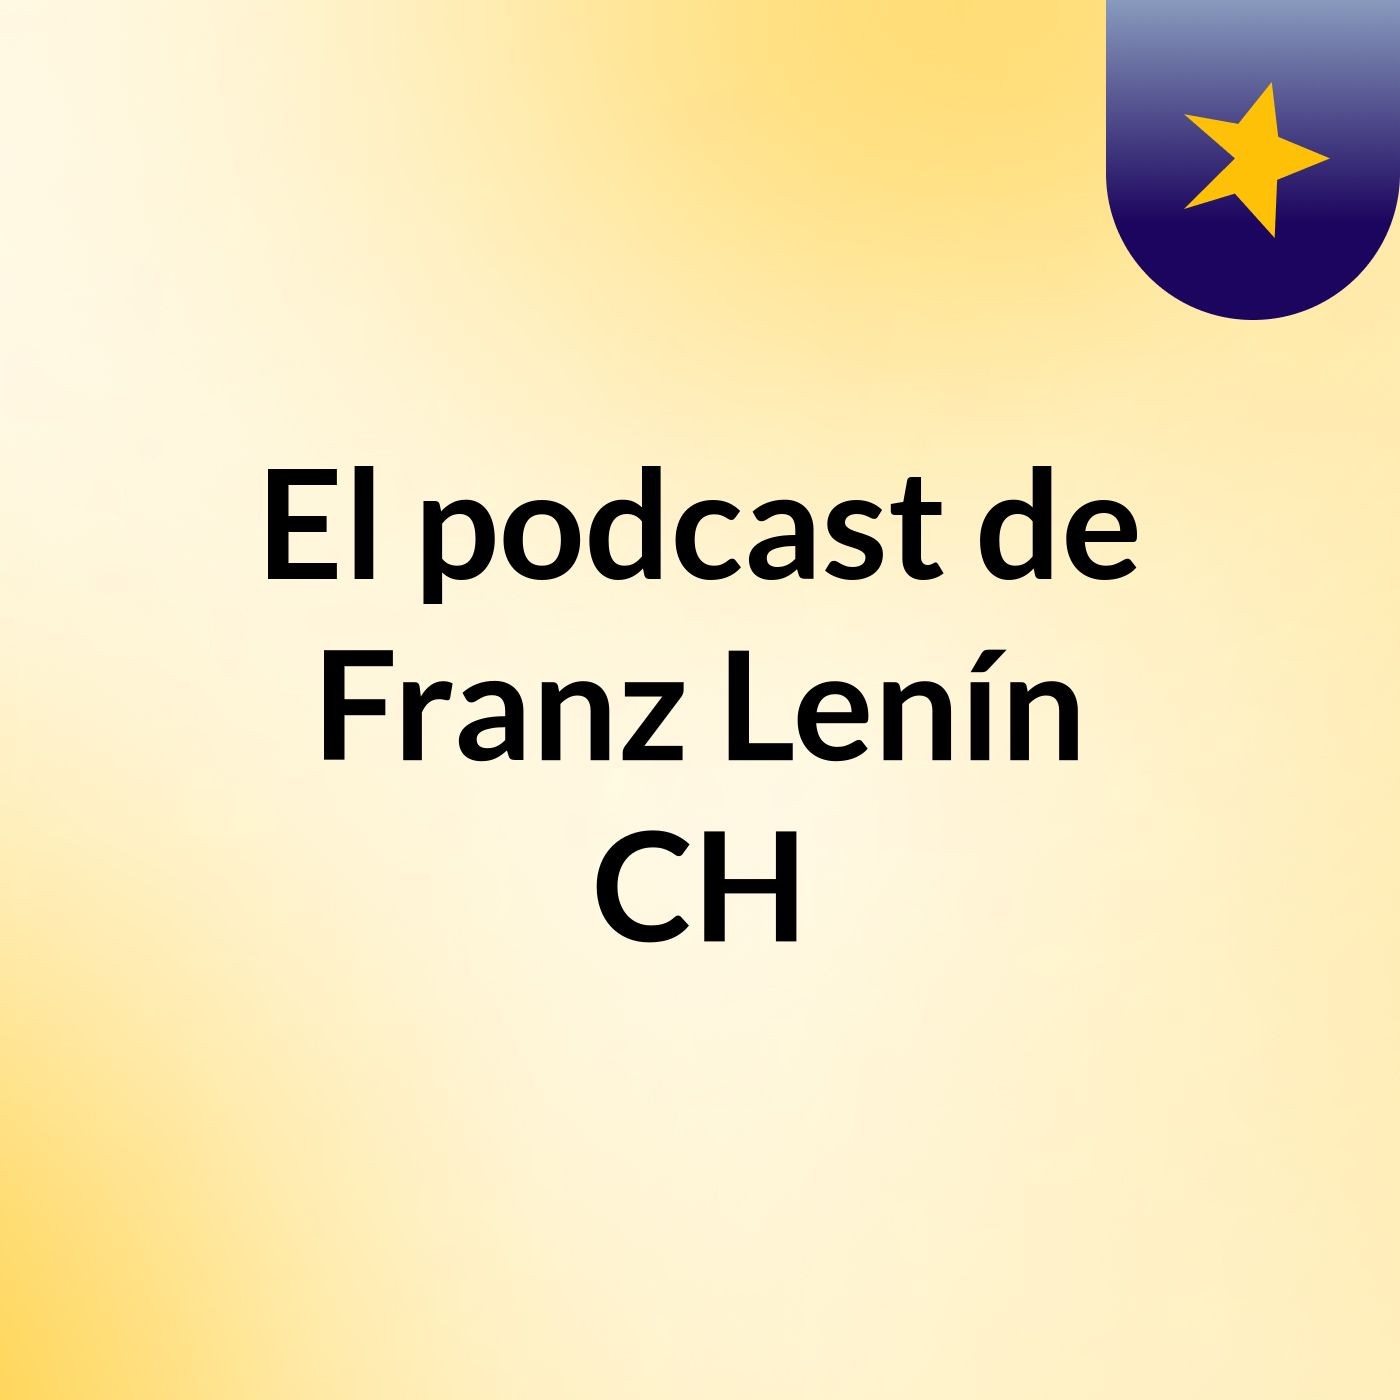 El podcast de Franz Lenín CH